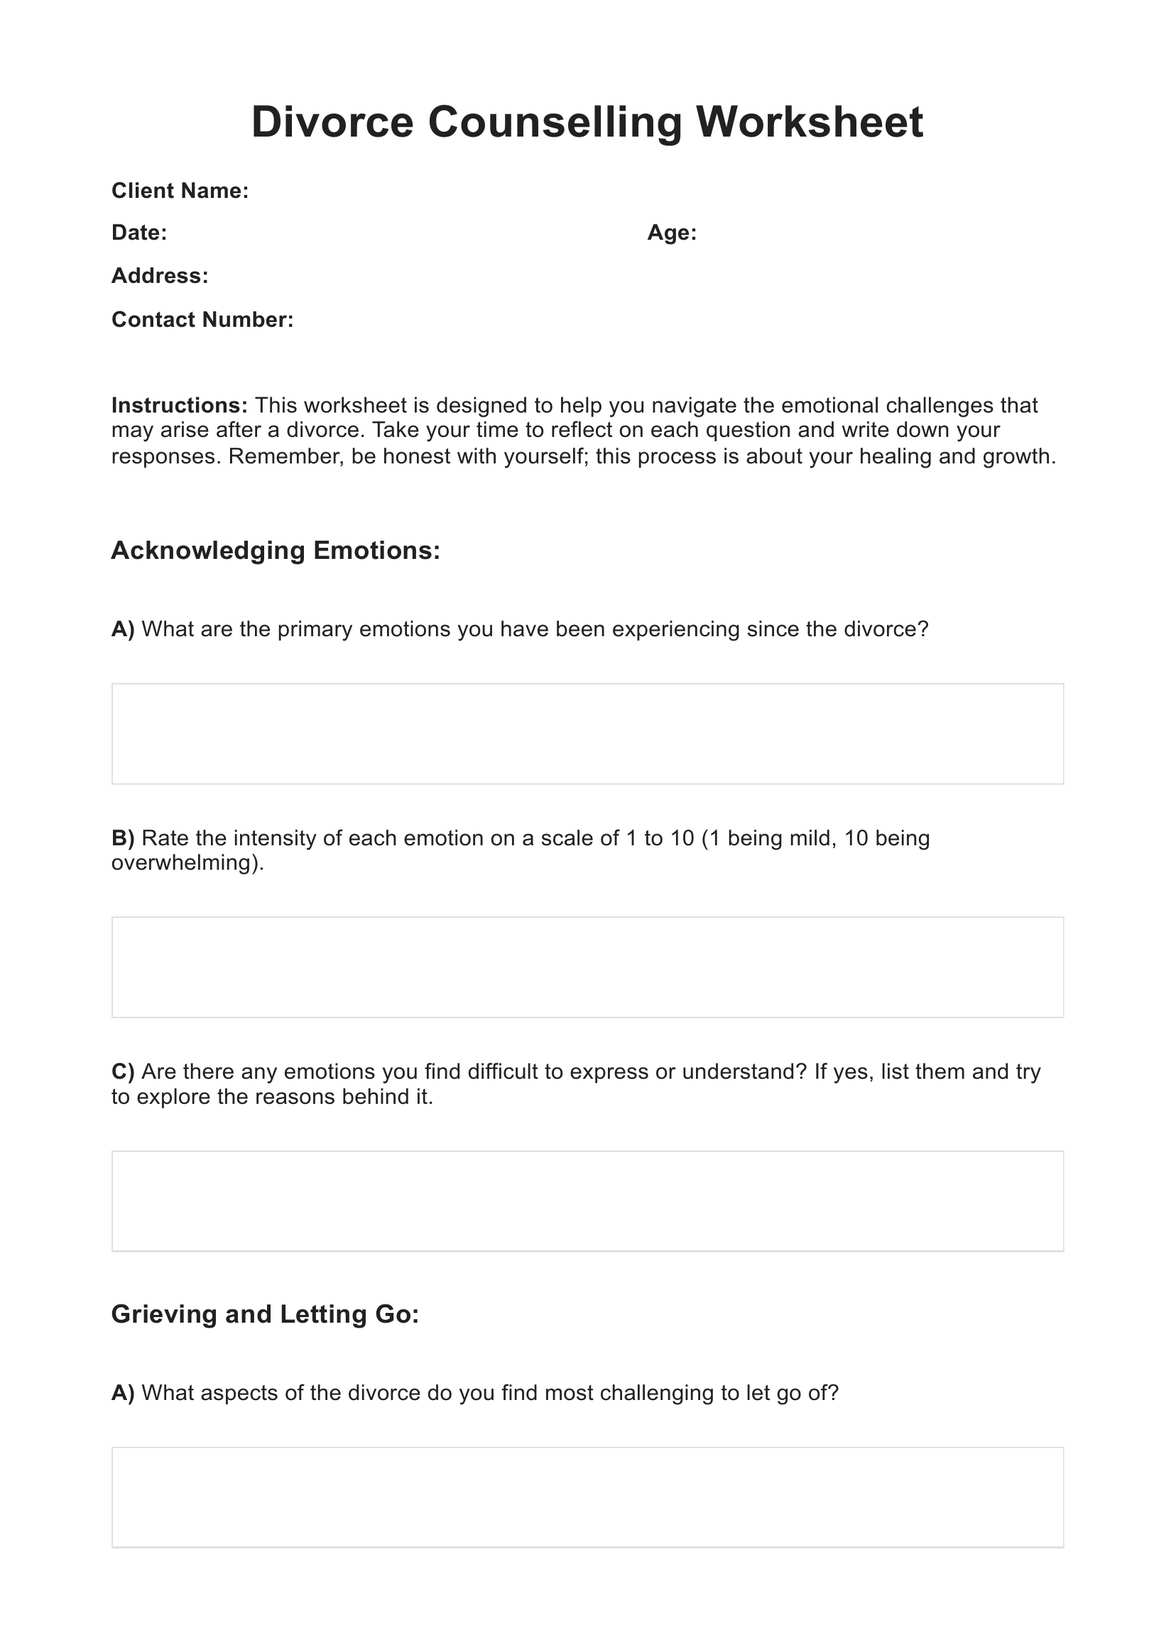 Divorce Counseling Worksheet PDF Example